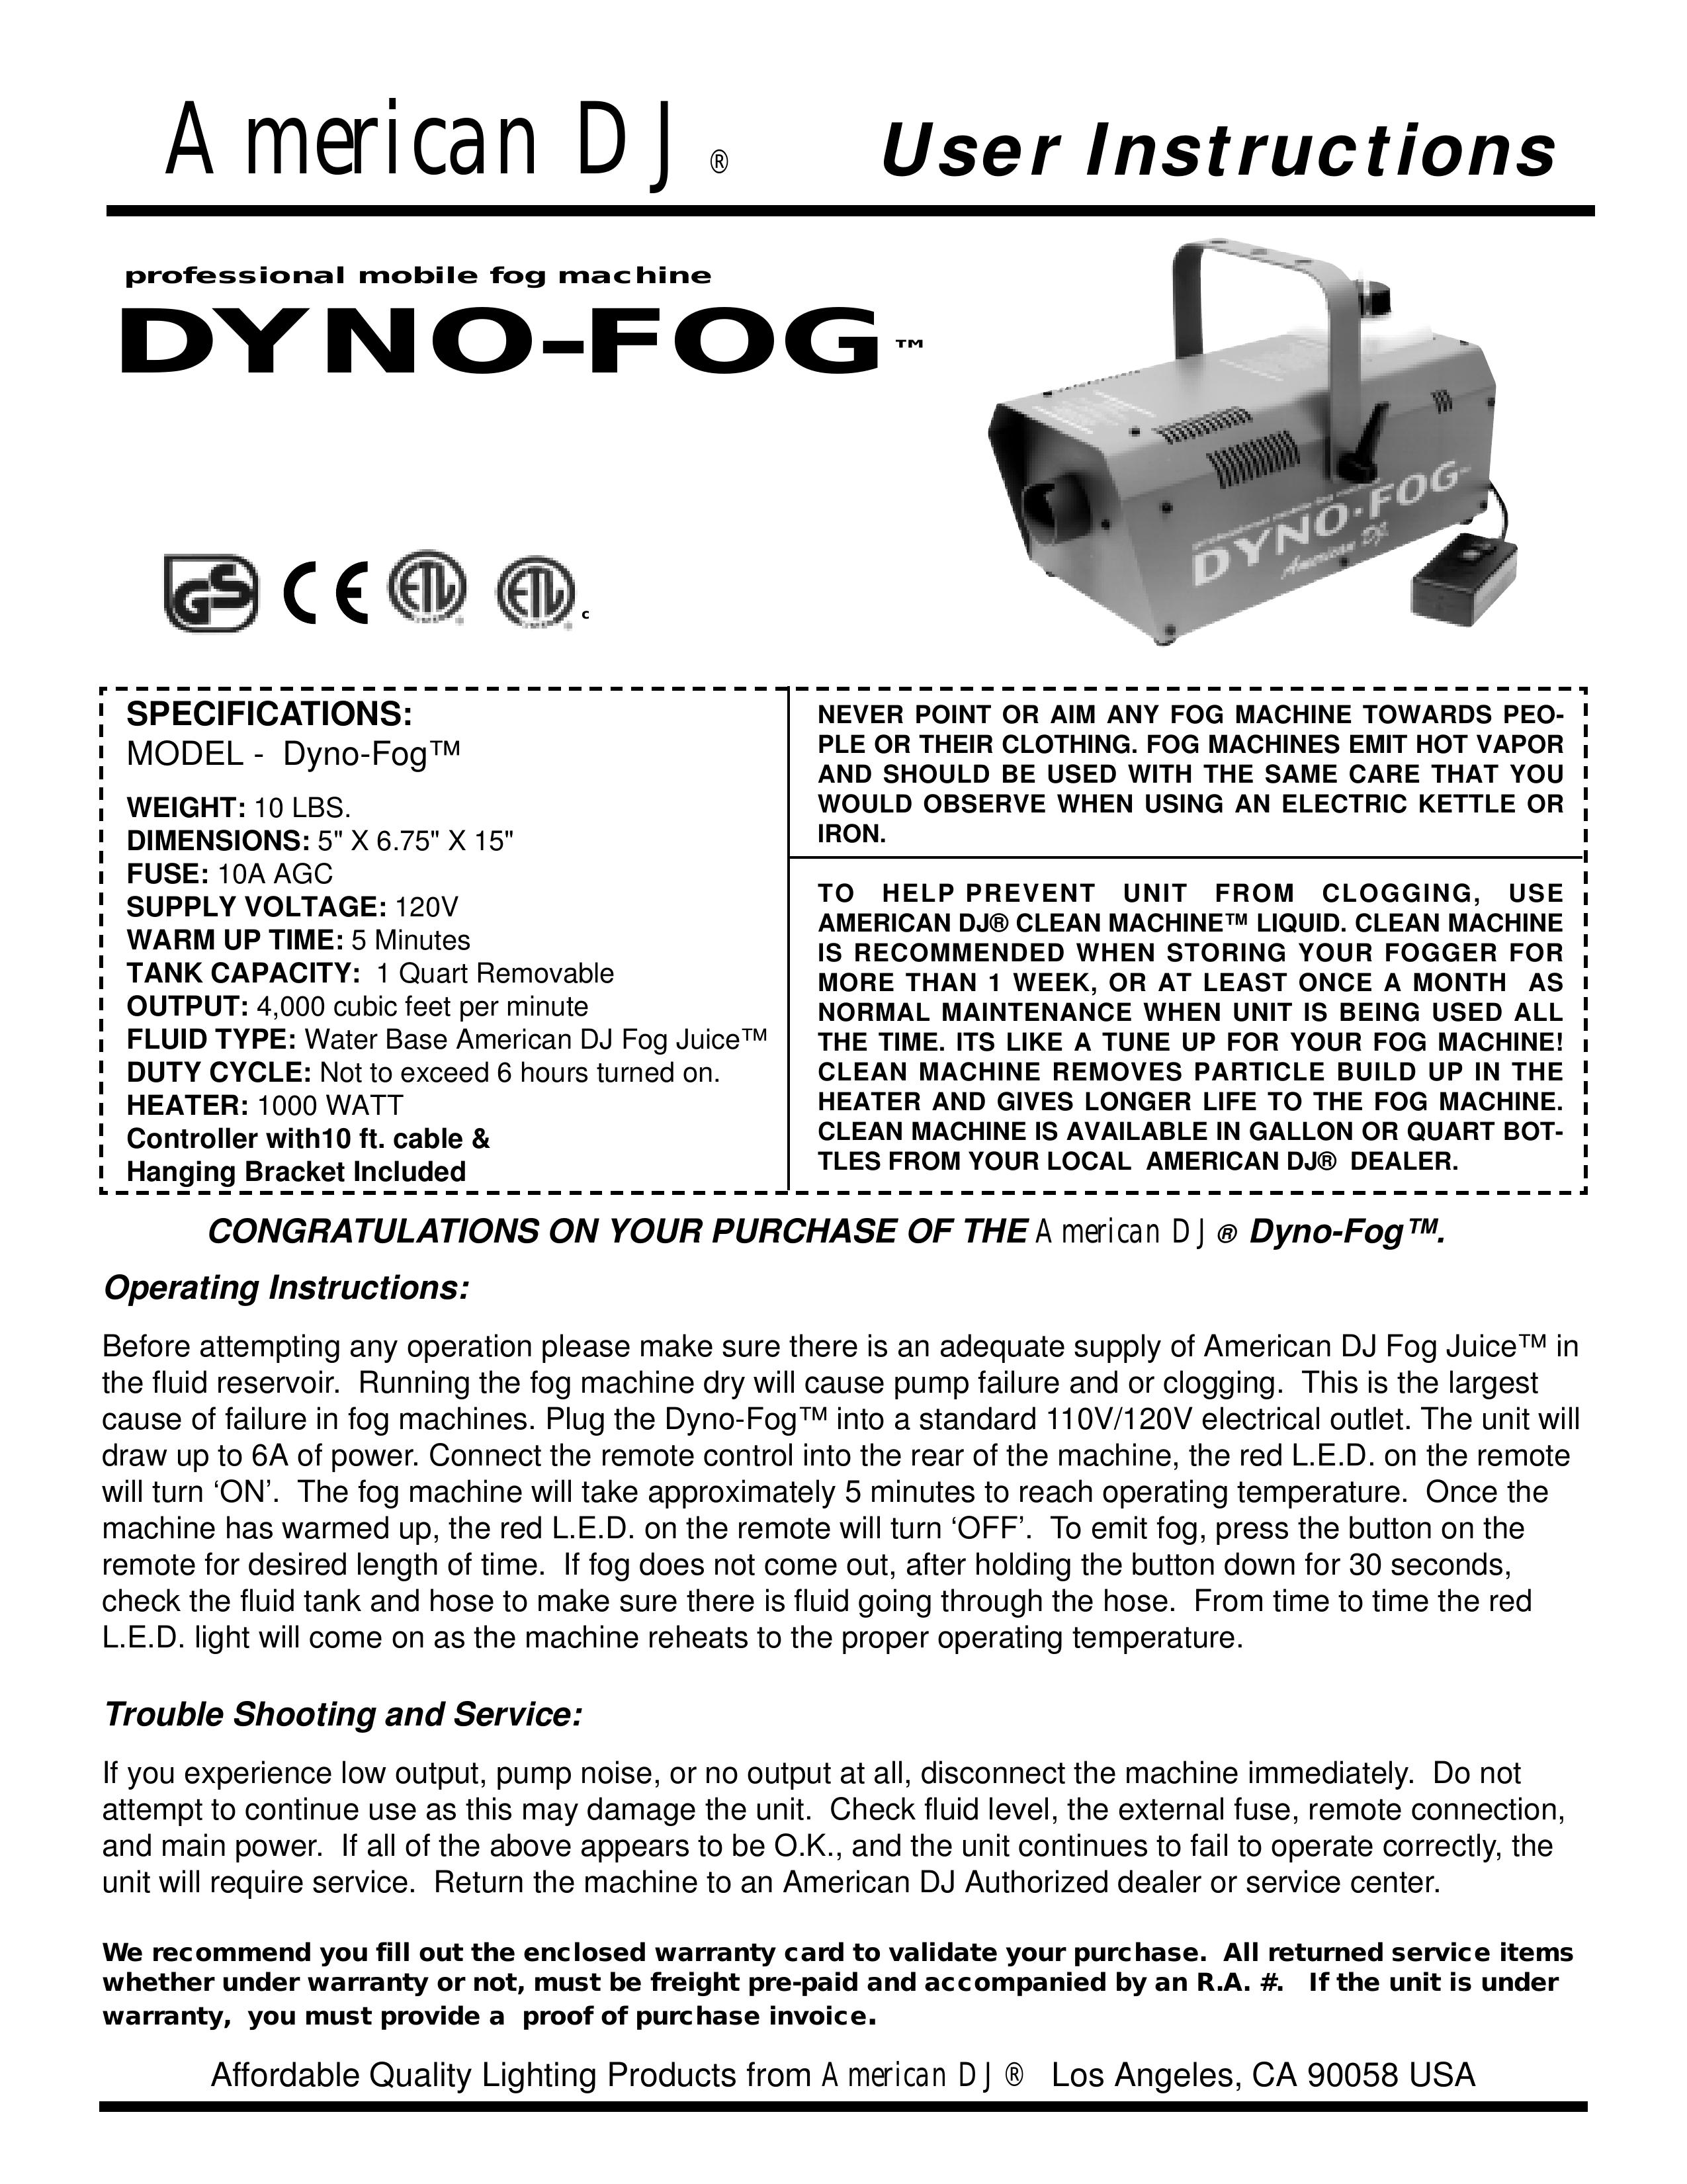 American DJ Dyno-Fog DJ Equipment User Manual (Page 1)